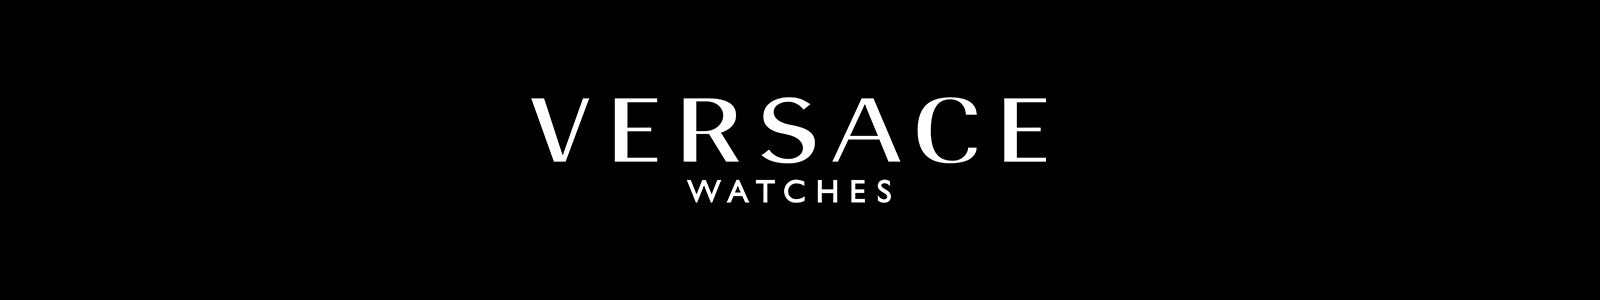 Versace, Watches